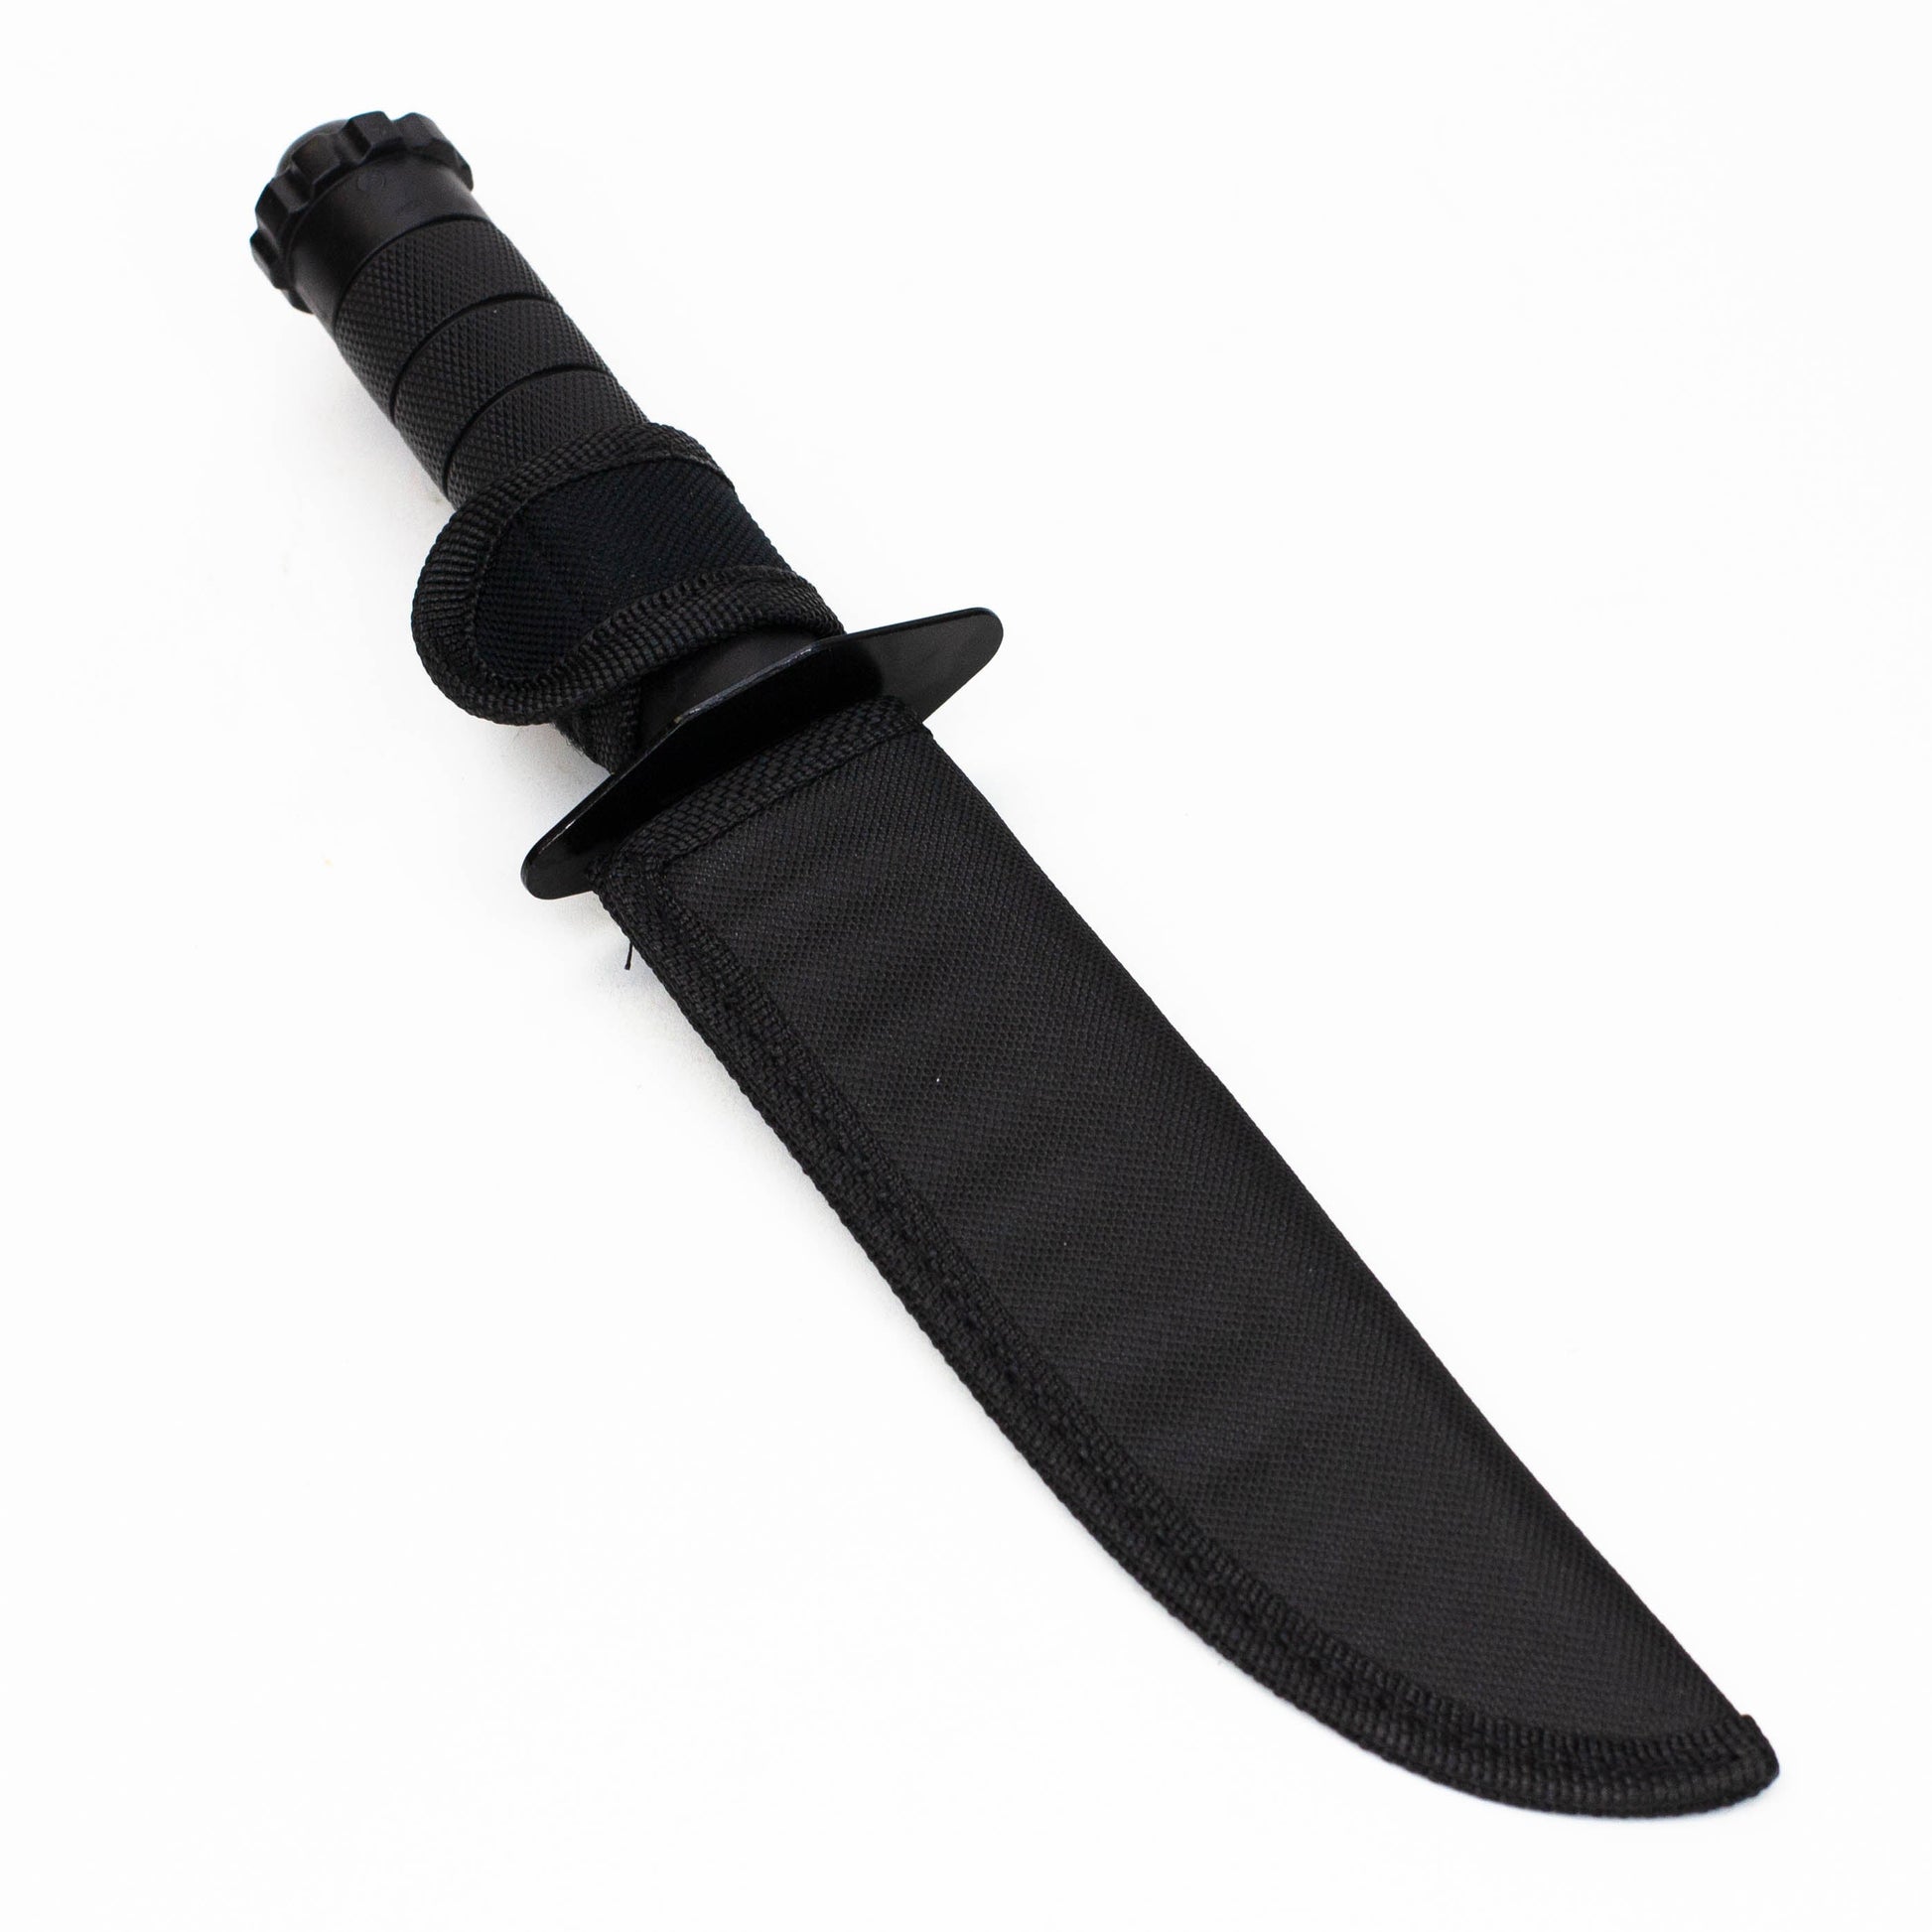 ALPHASTEEL Hunting Knife - Black Survival_1